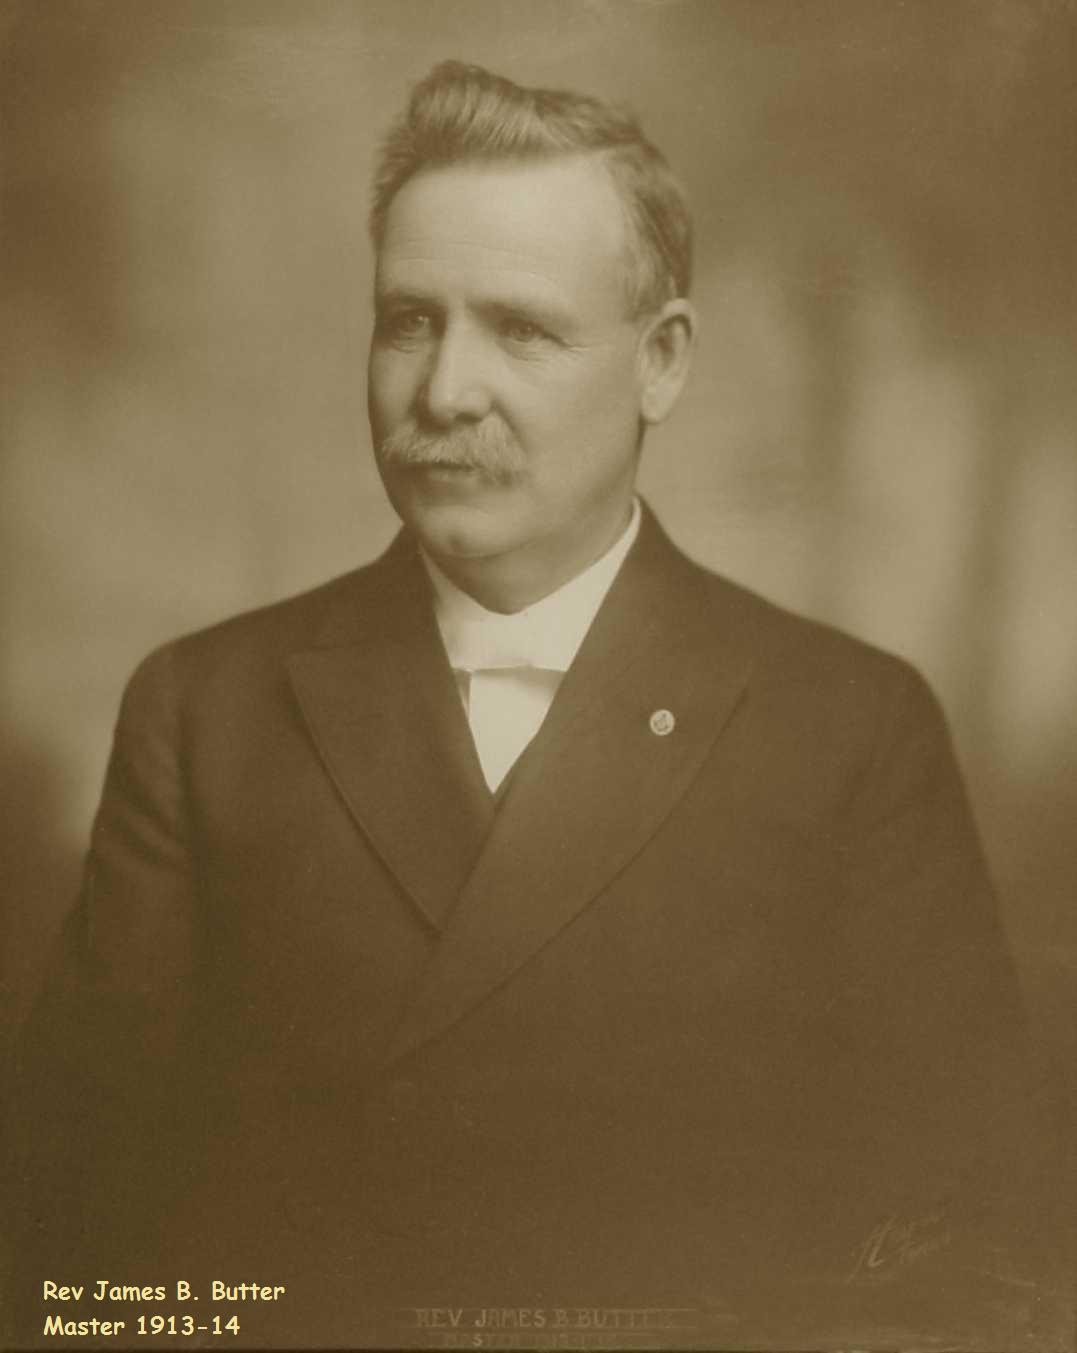 Rev. James B. Butter, 1913-1914